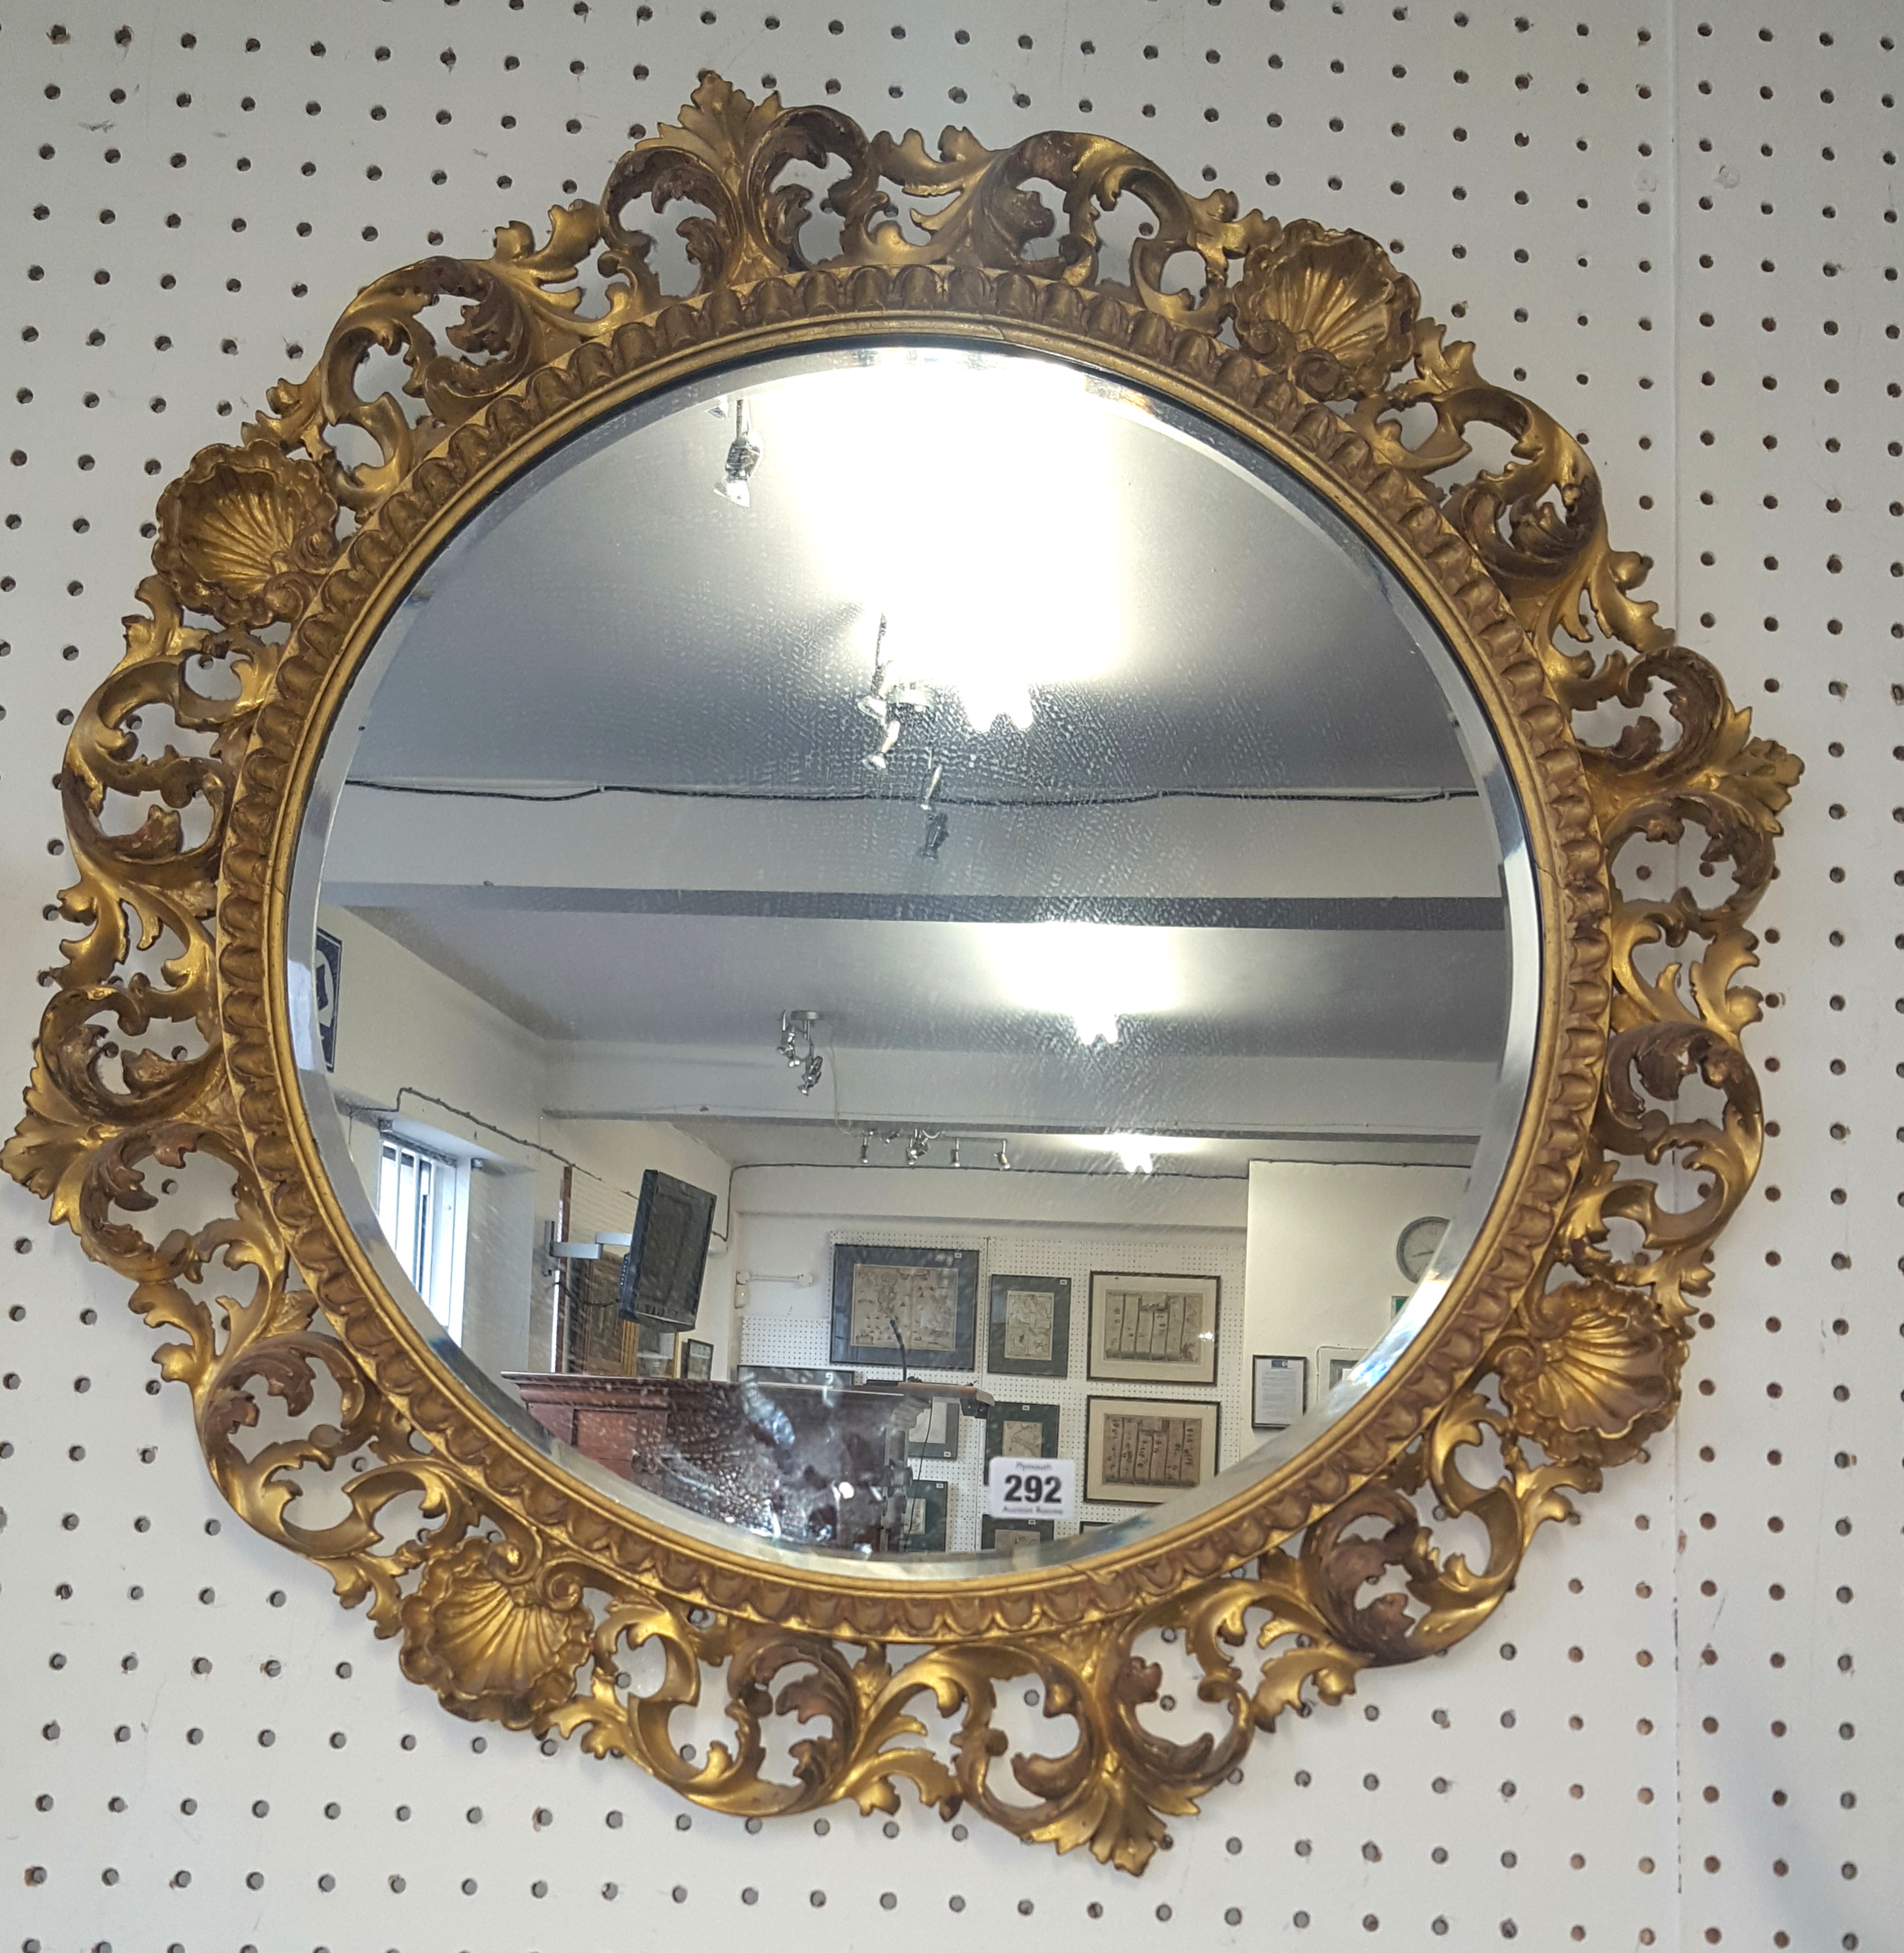 Circular mirror in gilt acanthus leaf frame, approx 67cm diameter.